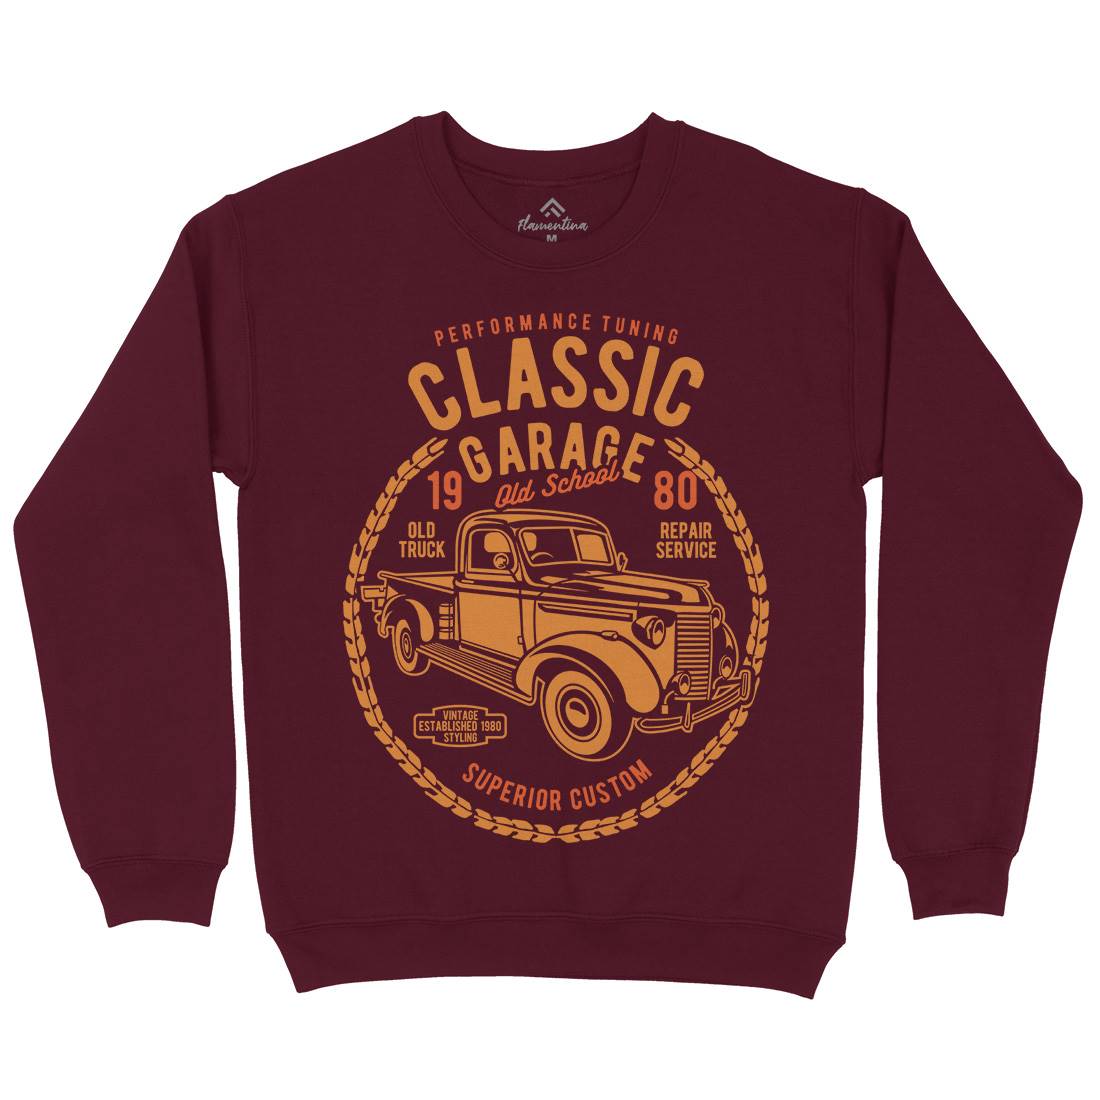 Classic Garage Kids Crew Neck Sweatshirt Cars B194